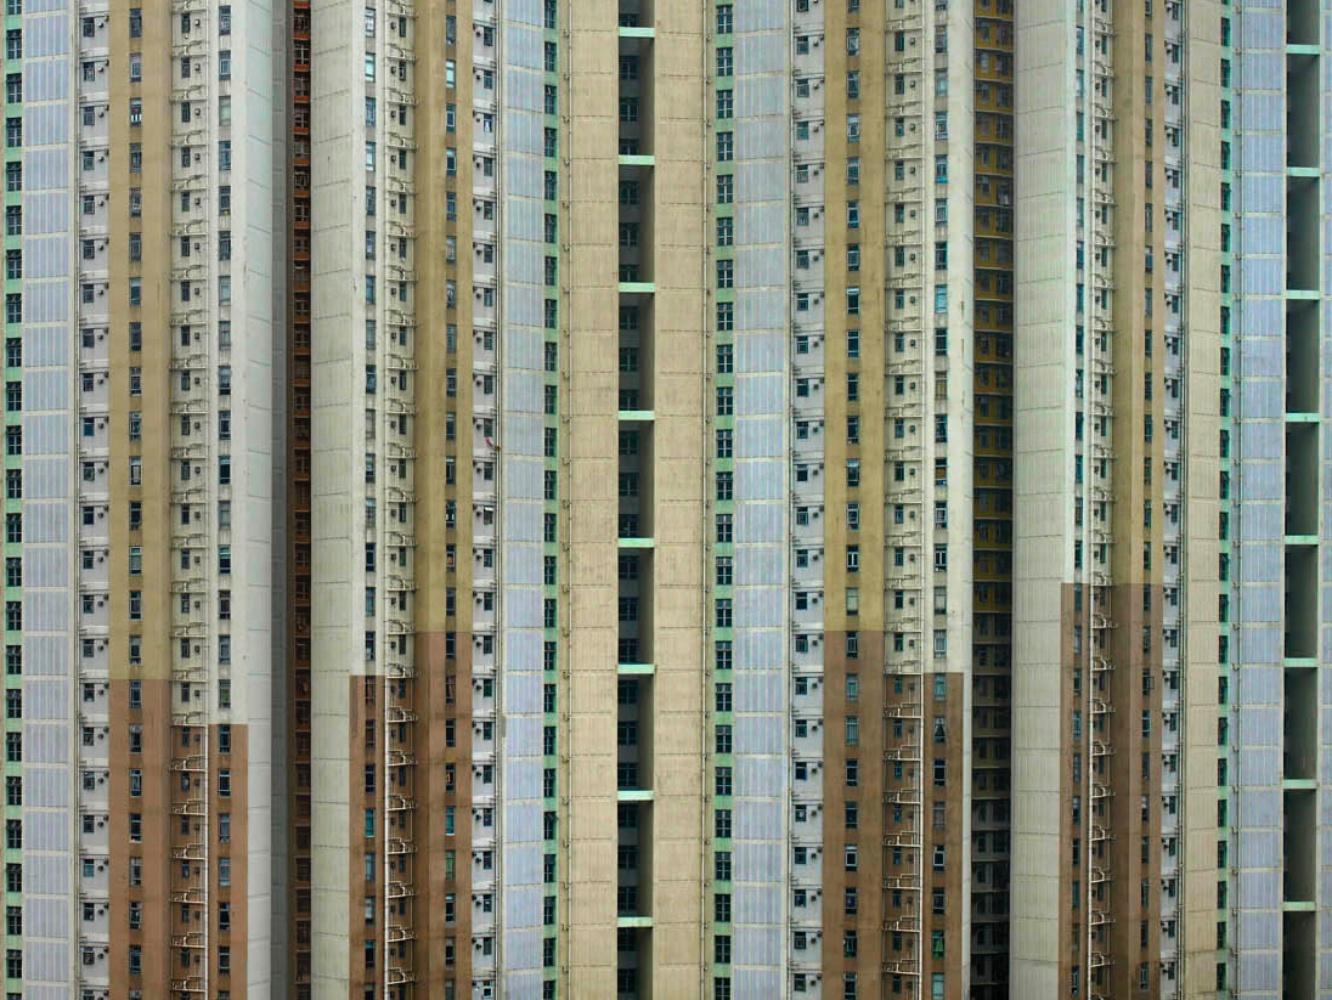 Architecture of Density #111 – Michael Wolf, City, Skyscraper, Architecture, Art For Sale 1